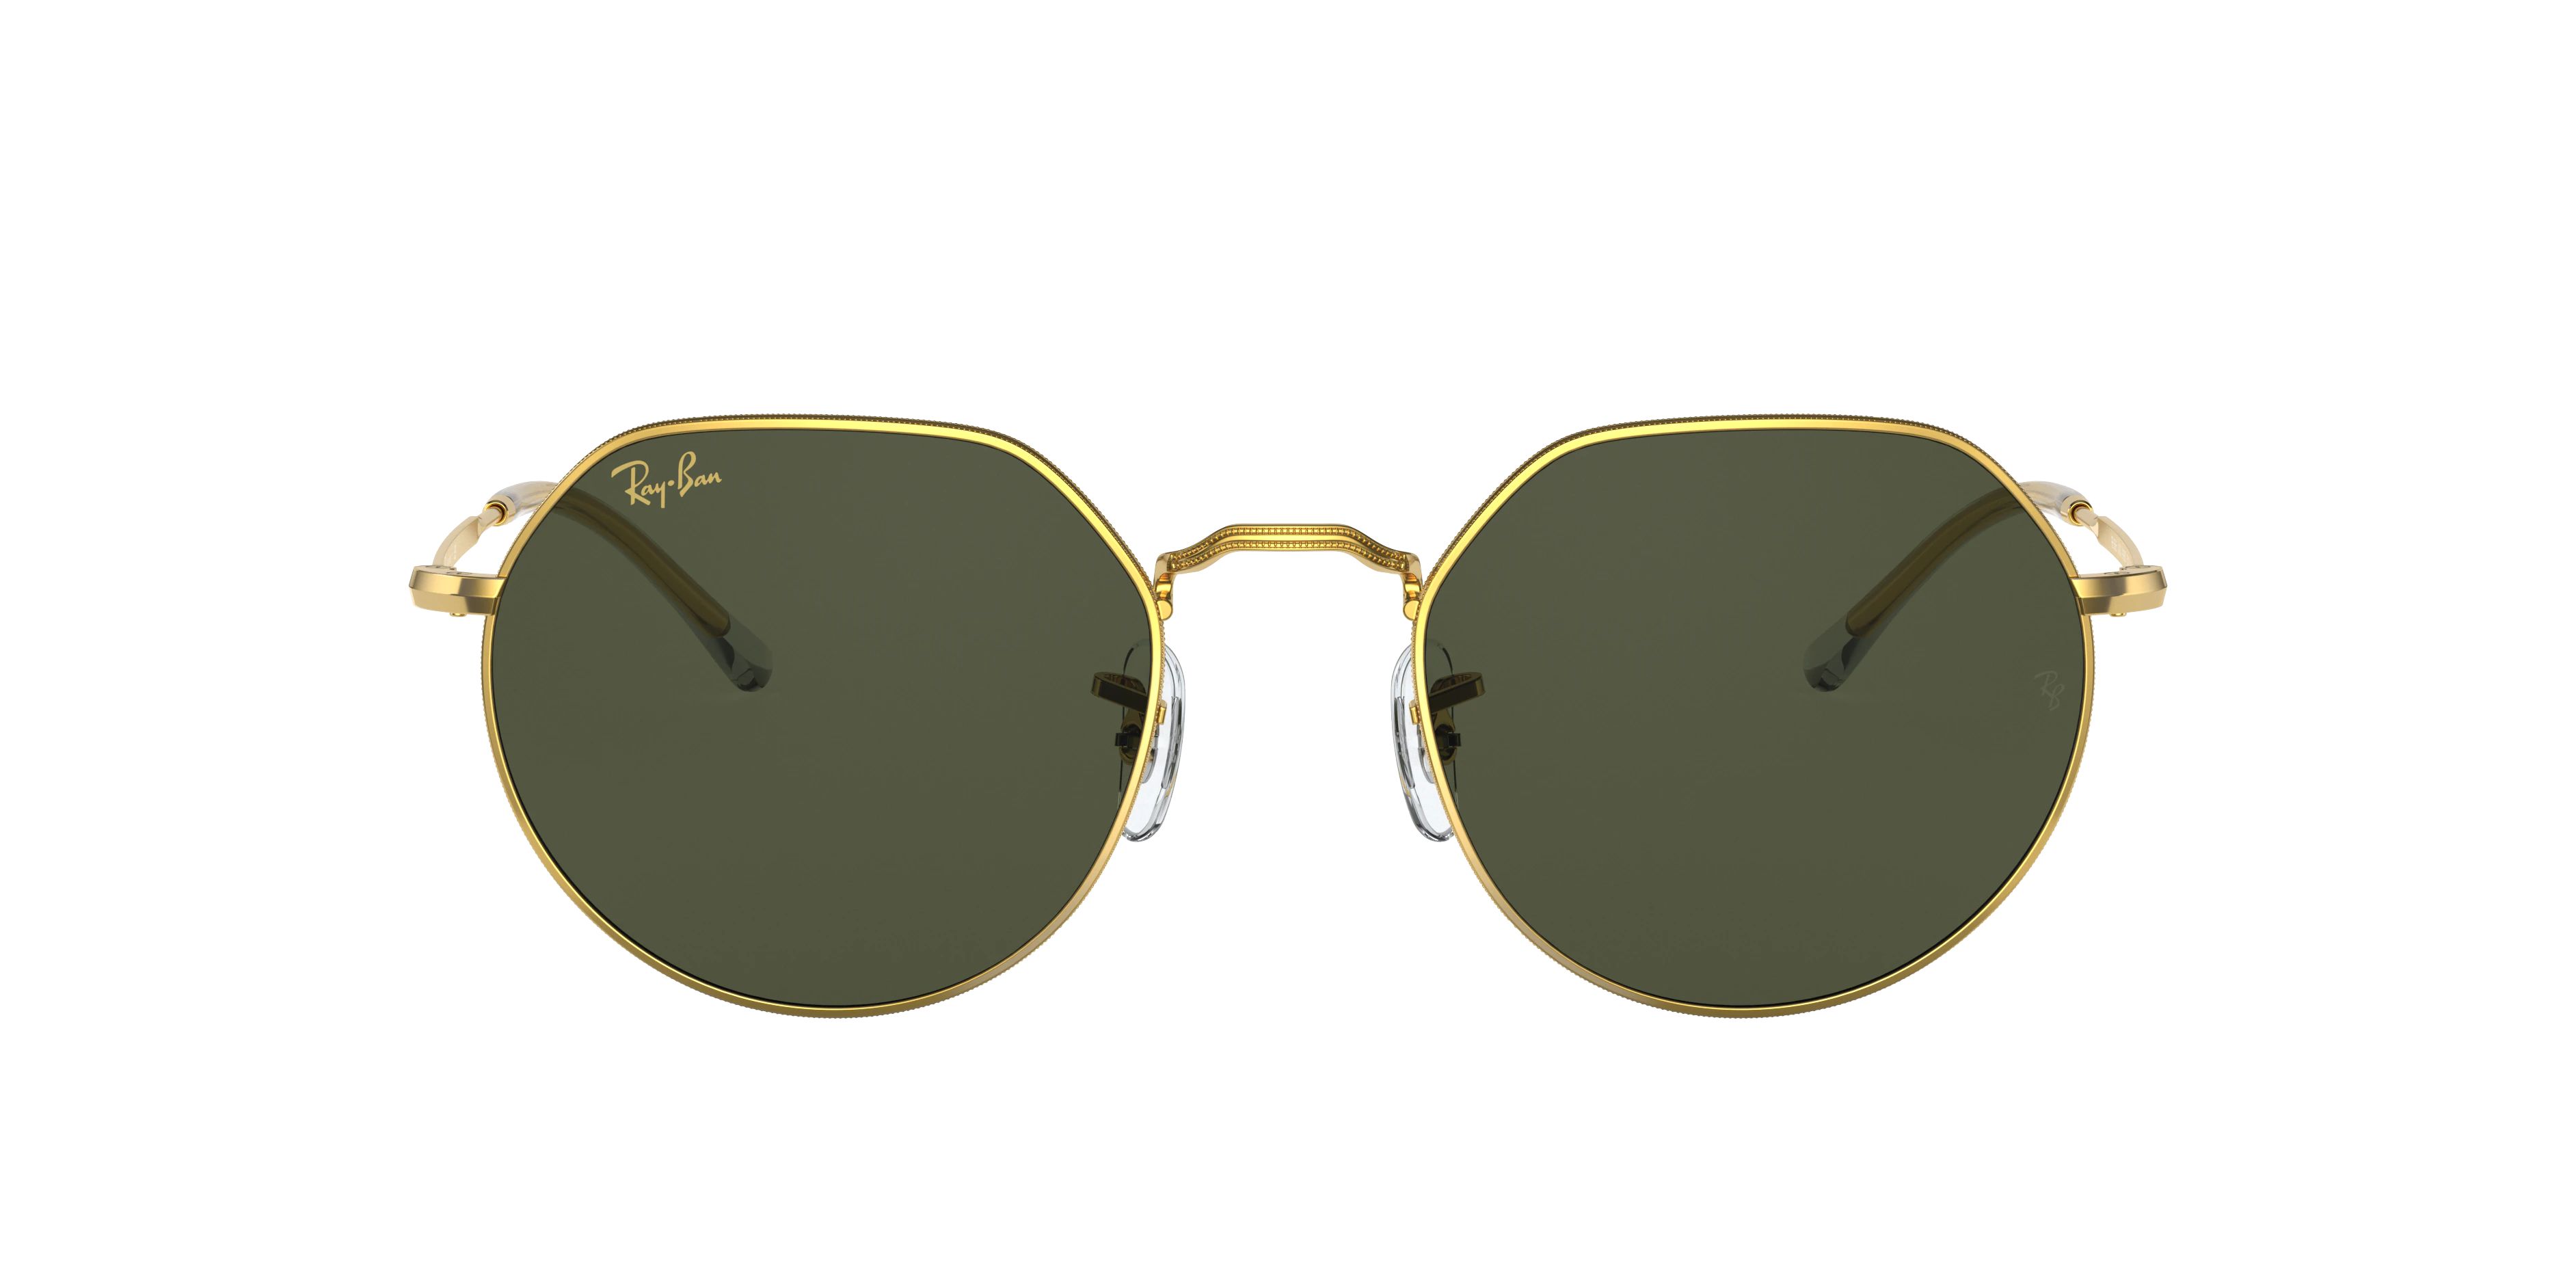 Ray-Ban Jack Sunglasses, Legend Gold Frame, G-15 Green Lens, 53mm ...